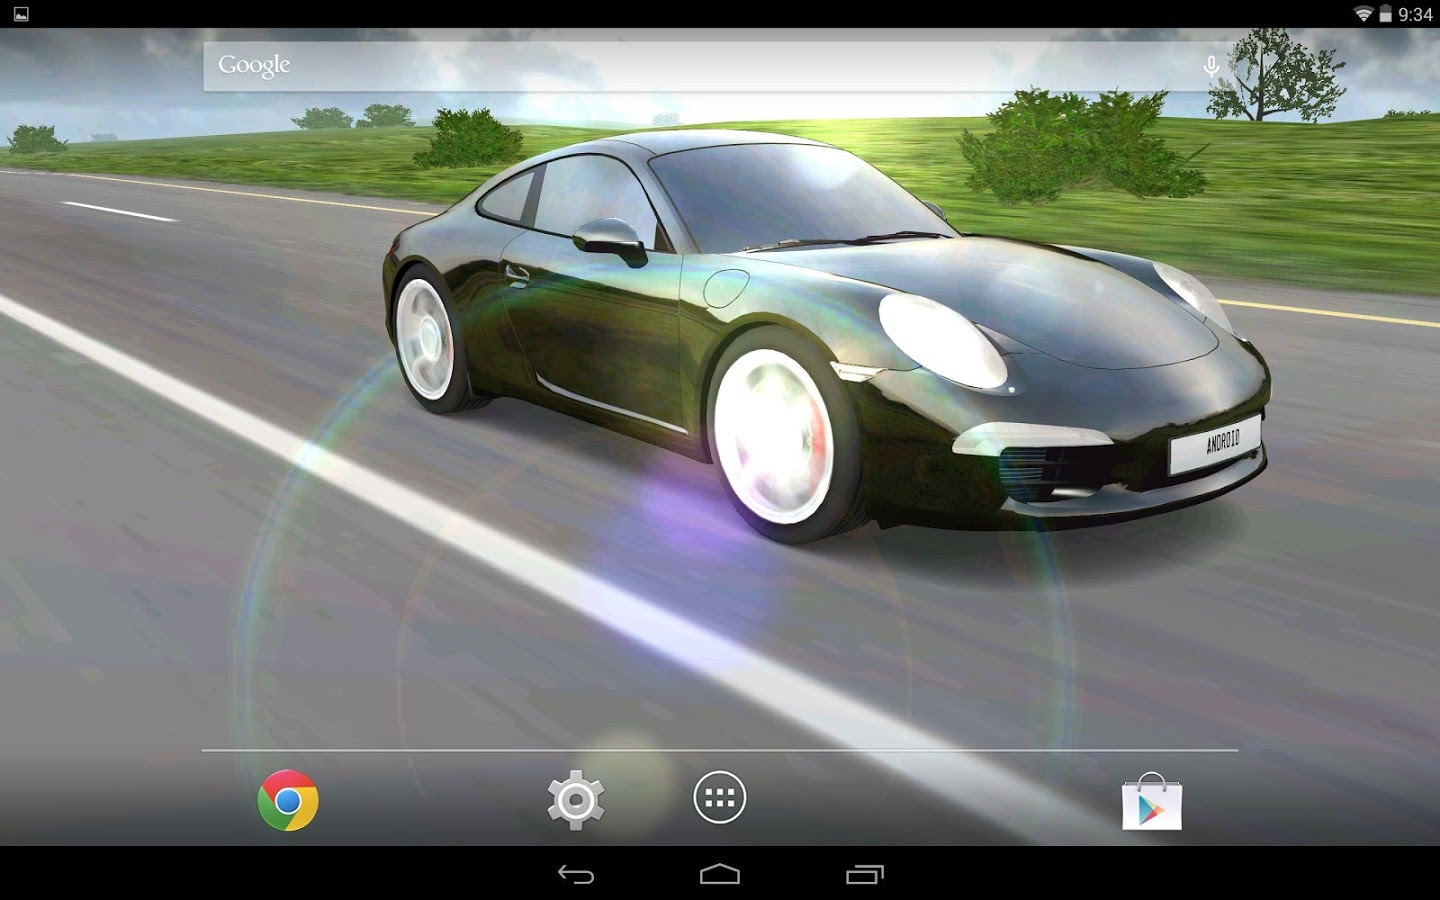 3d Car Live Wallpaper Full Version Free Download